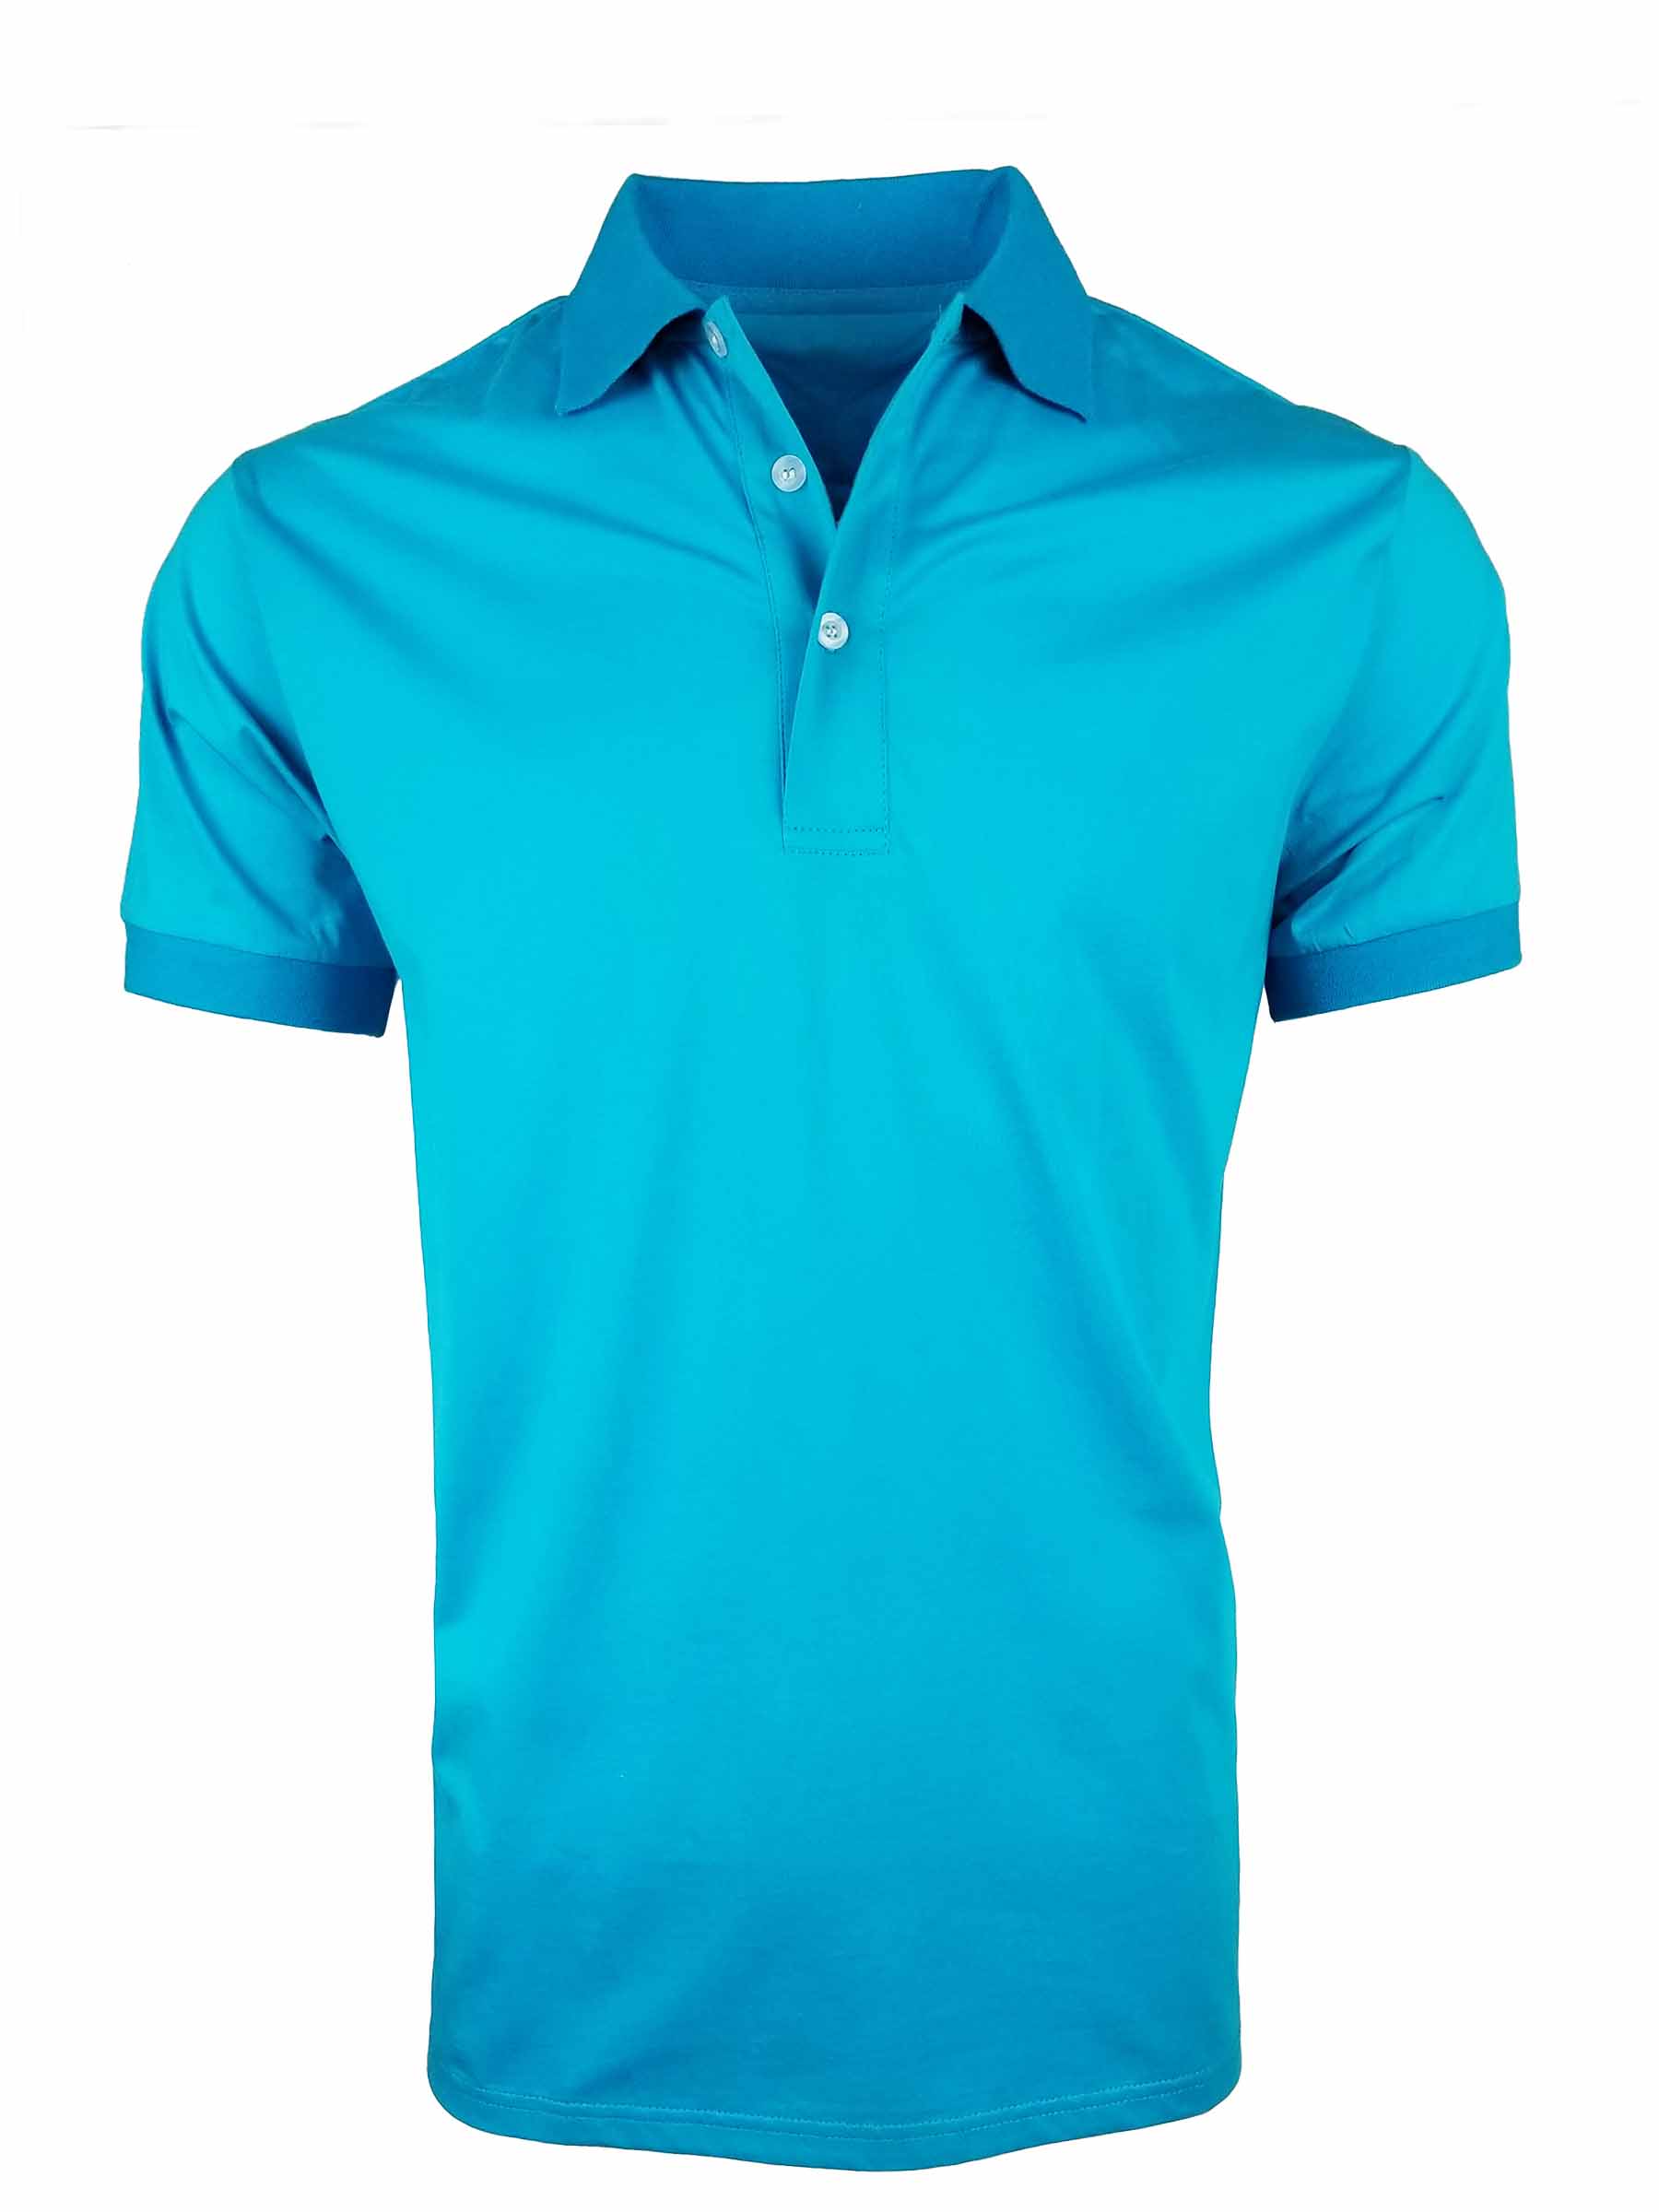 Men's All Occasion Mercerized Polo - Aqua - Uniform Edit